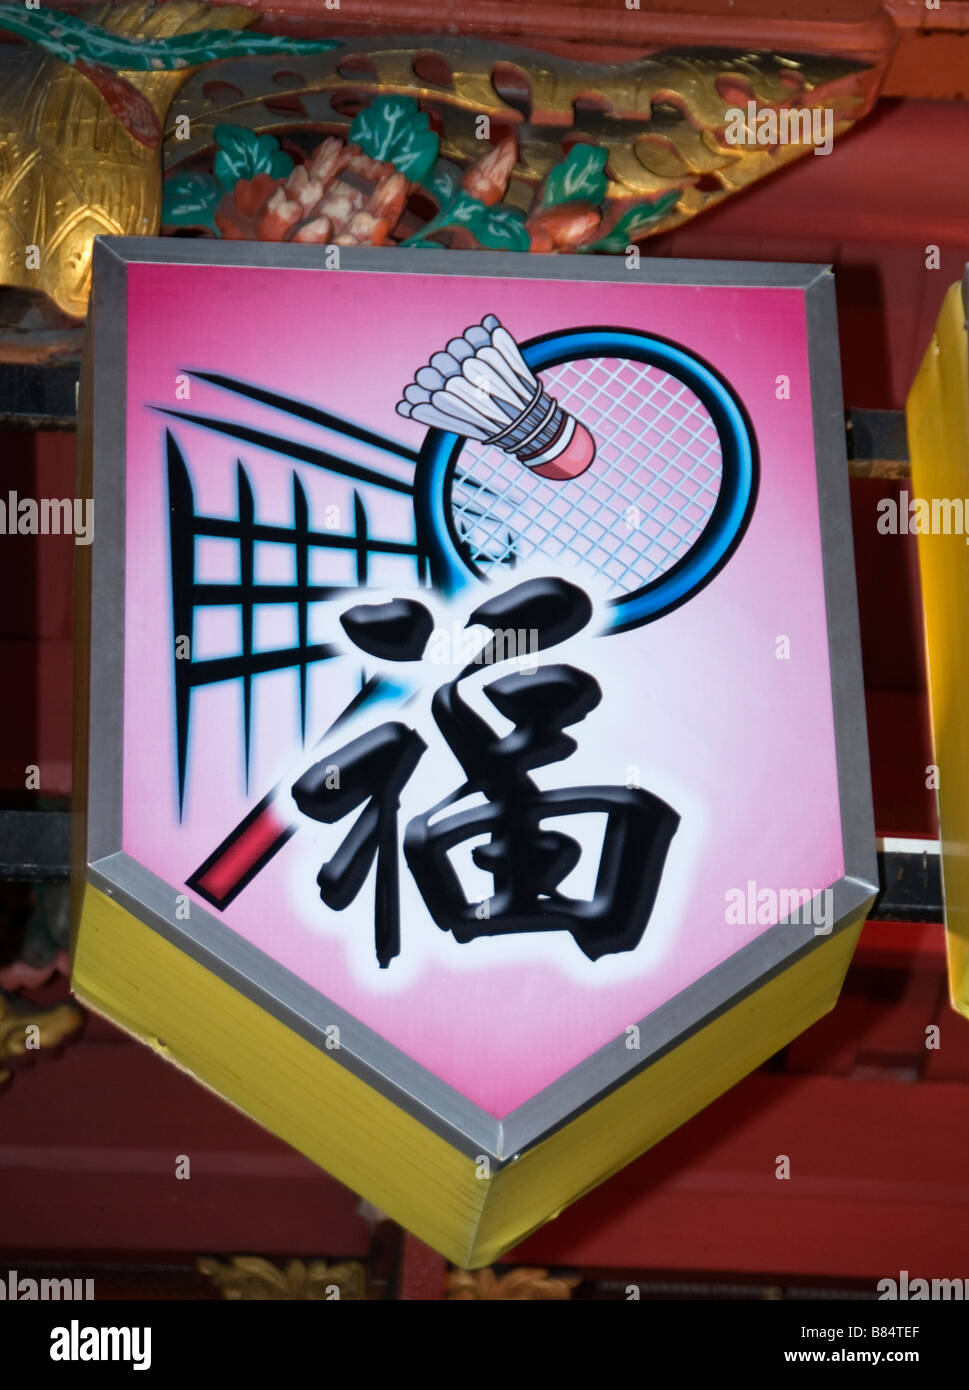 Malacca Malaysia Chinatown China Chinese beacon light neon sport play a tennis play badminton game Stock Photo